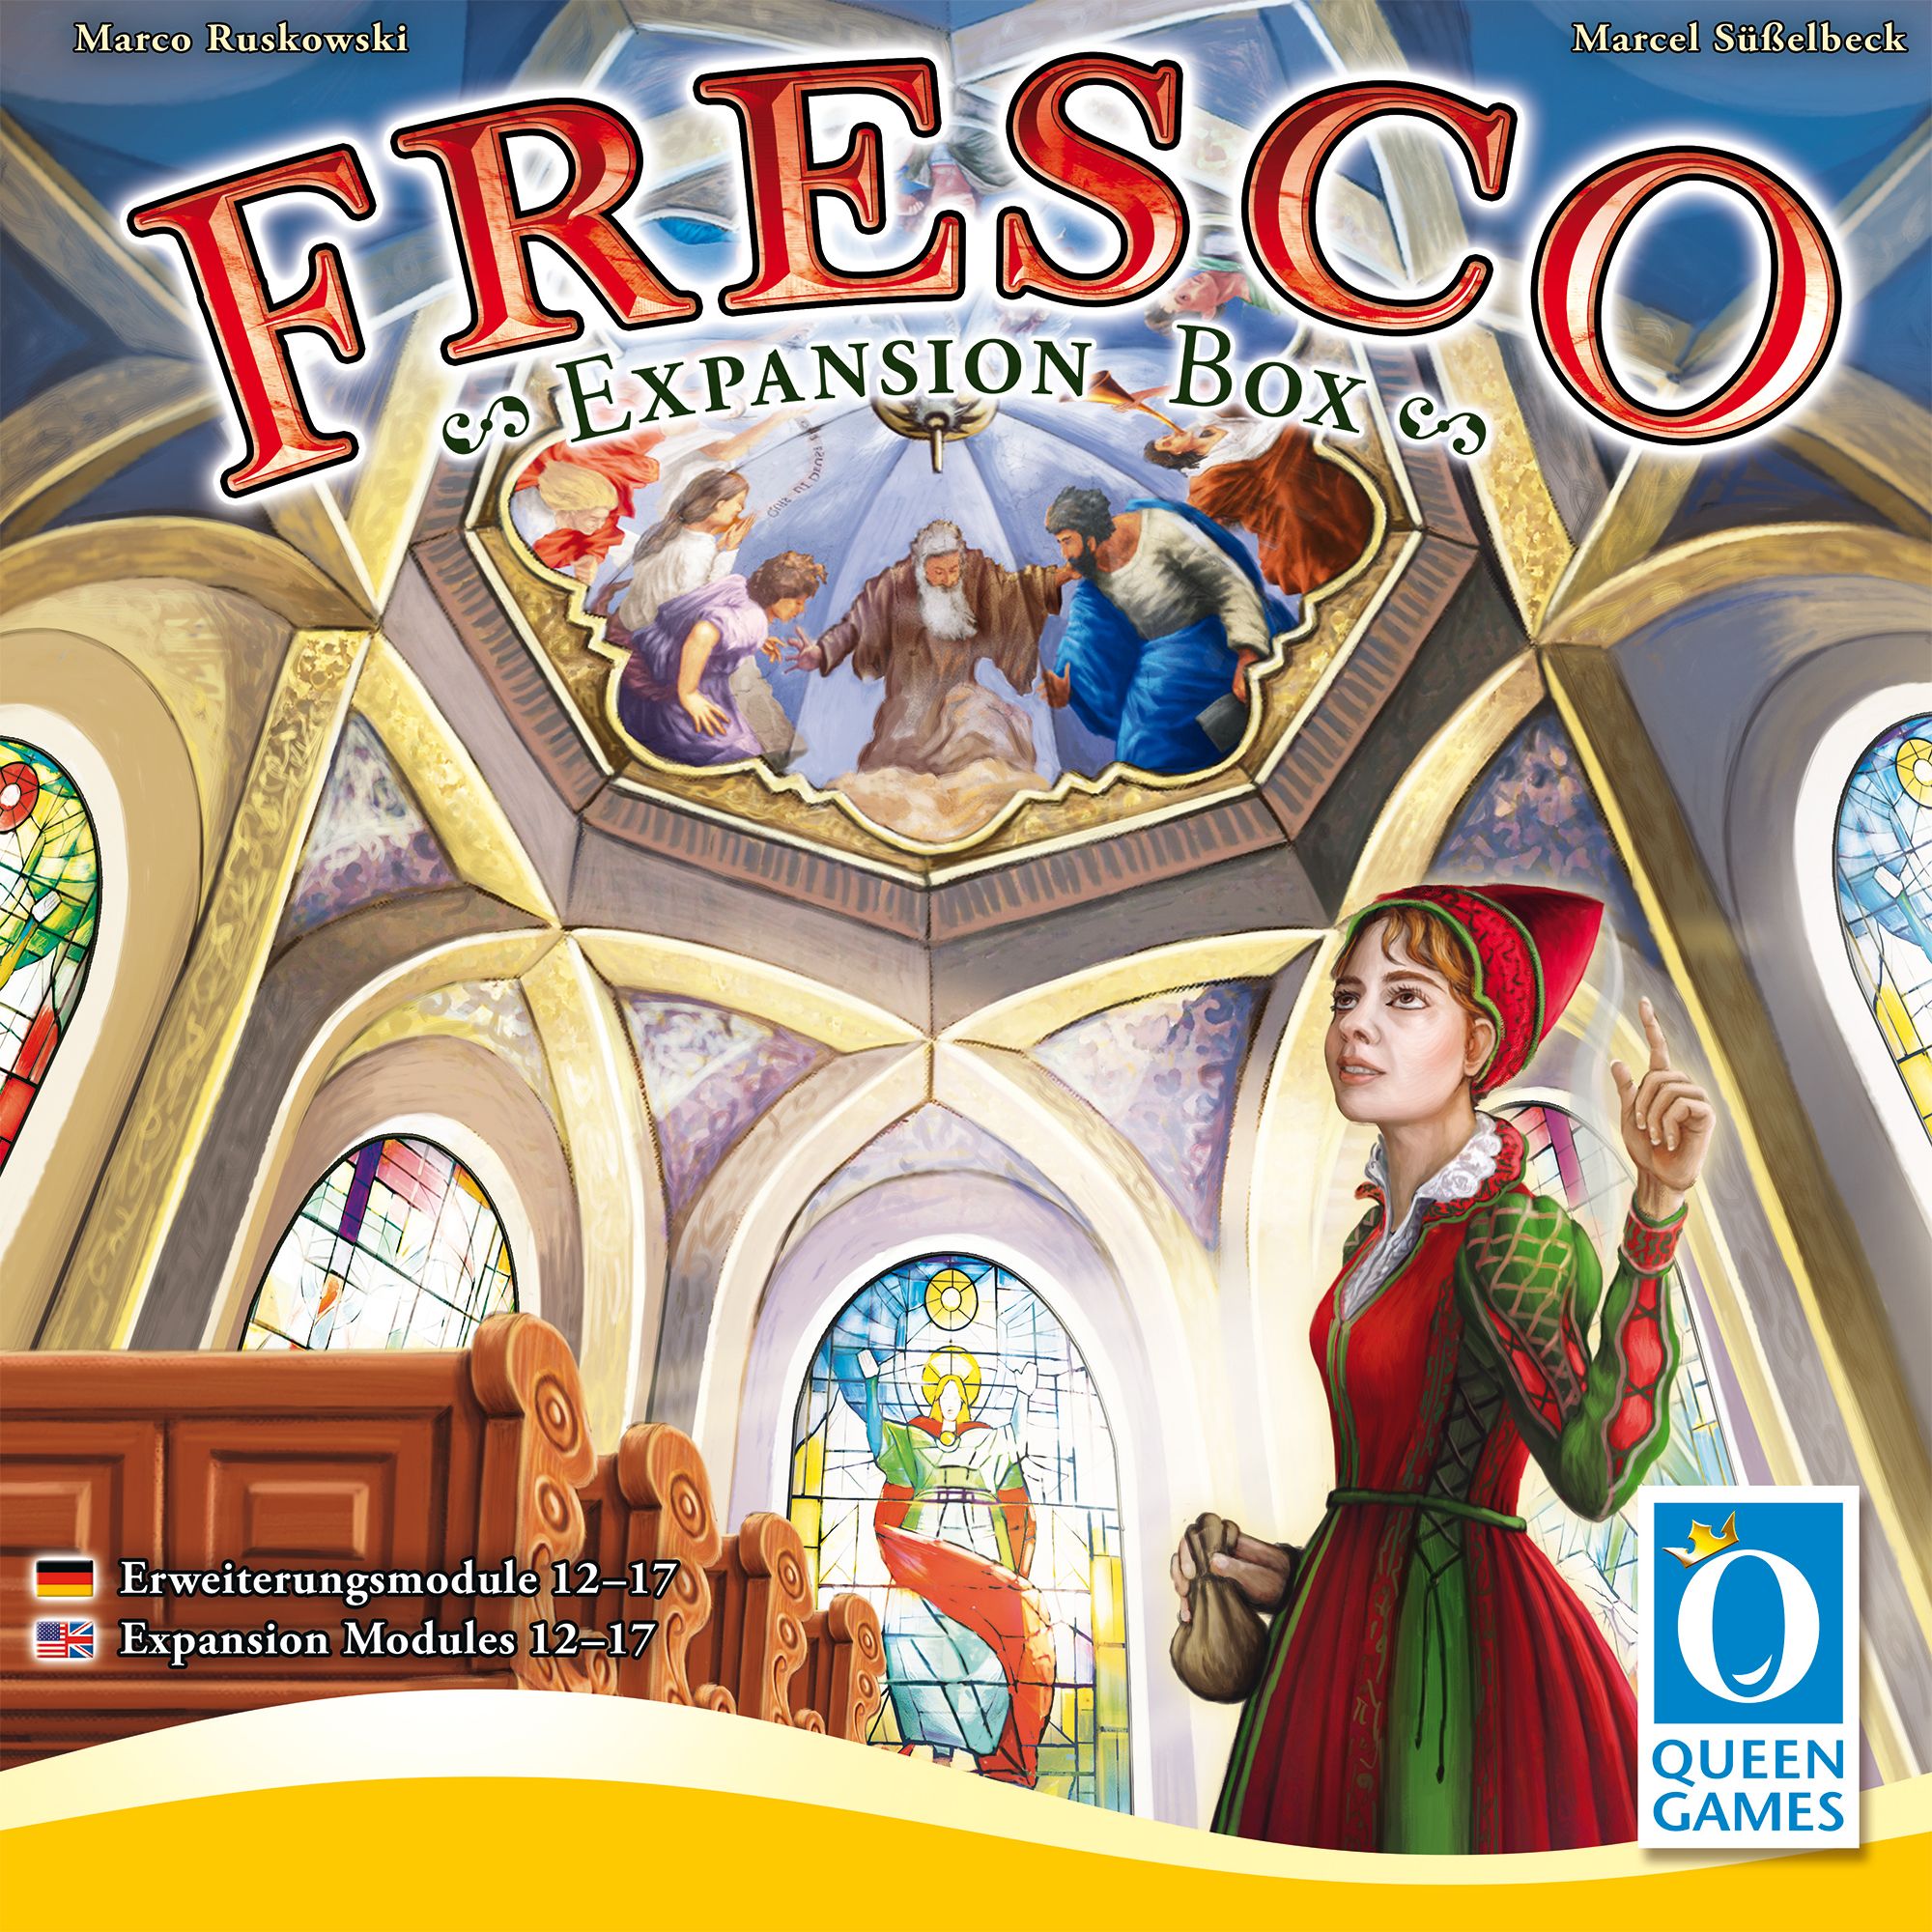 Fresco: Expansion Box 12-17